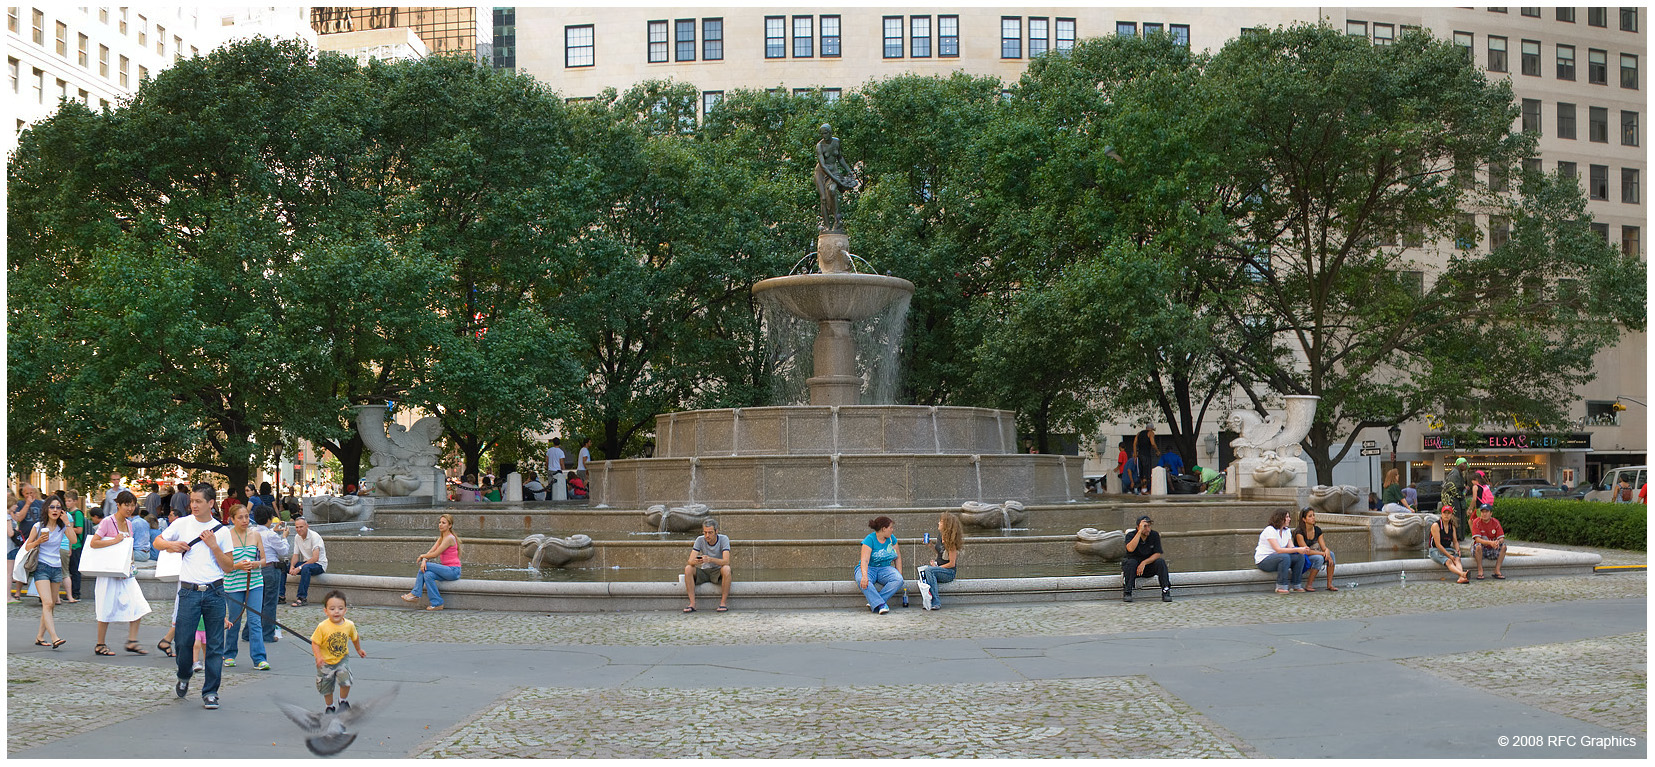 The Pulitzer Memorial Fountain